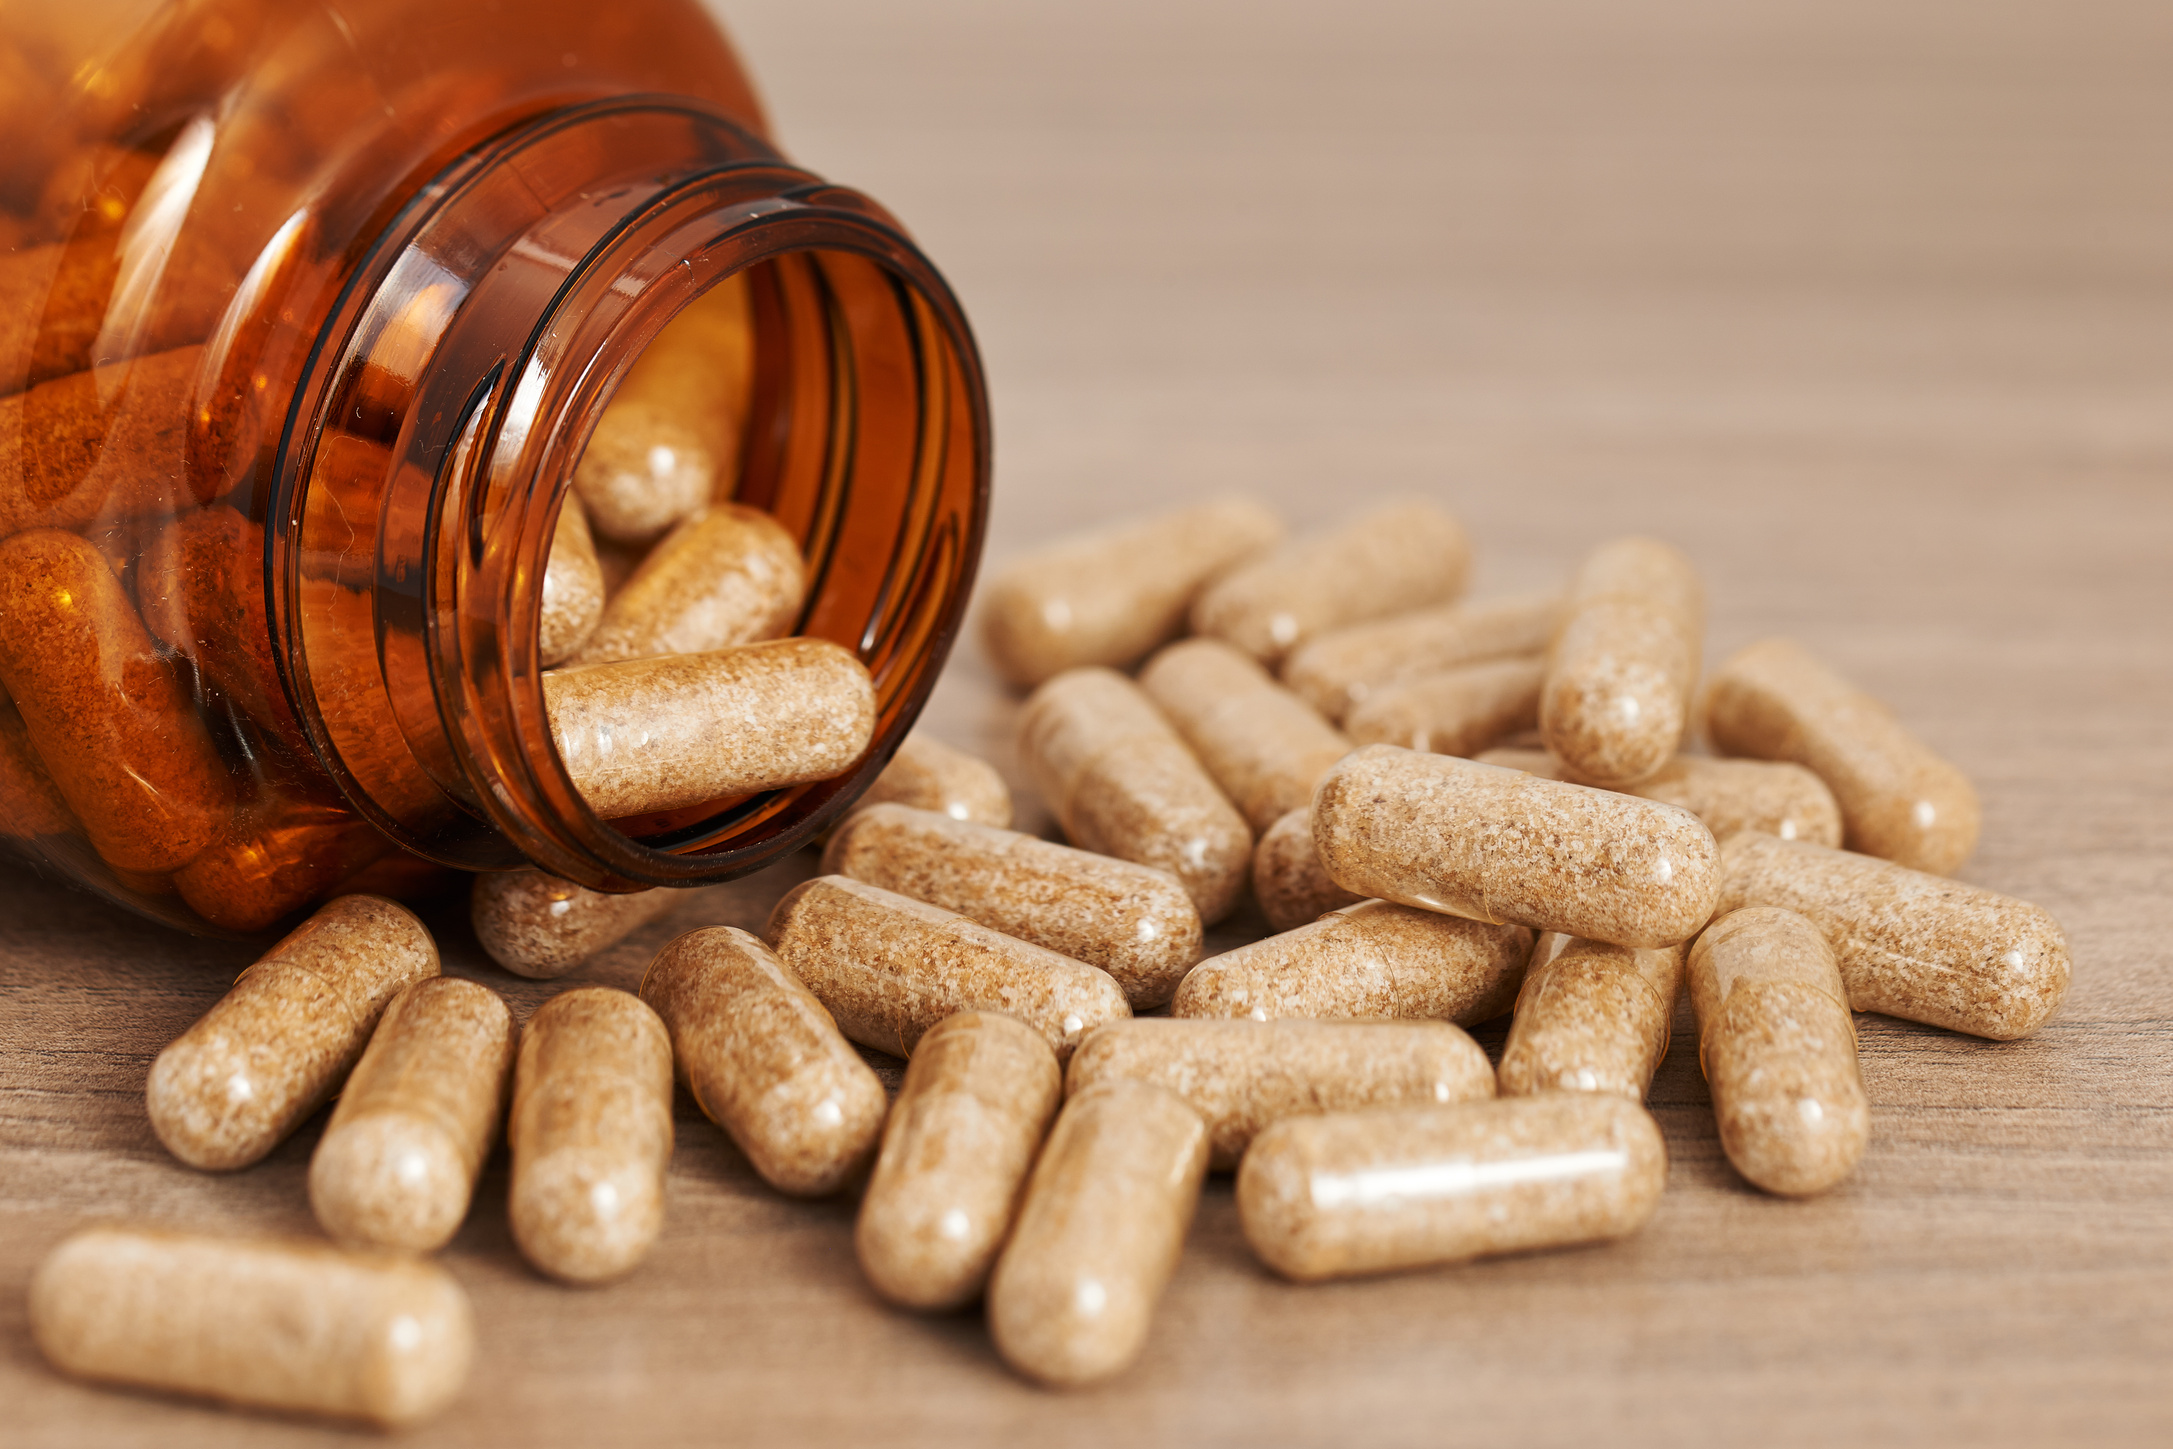 Homeopathic medicinal capsules